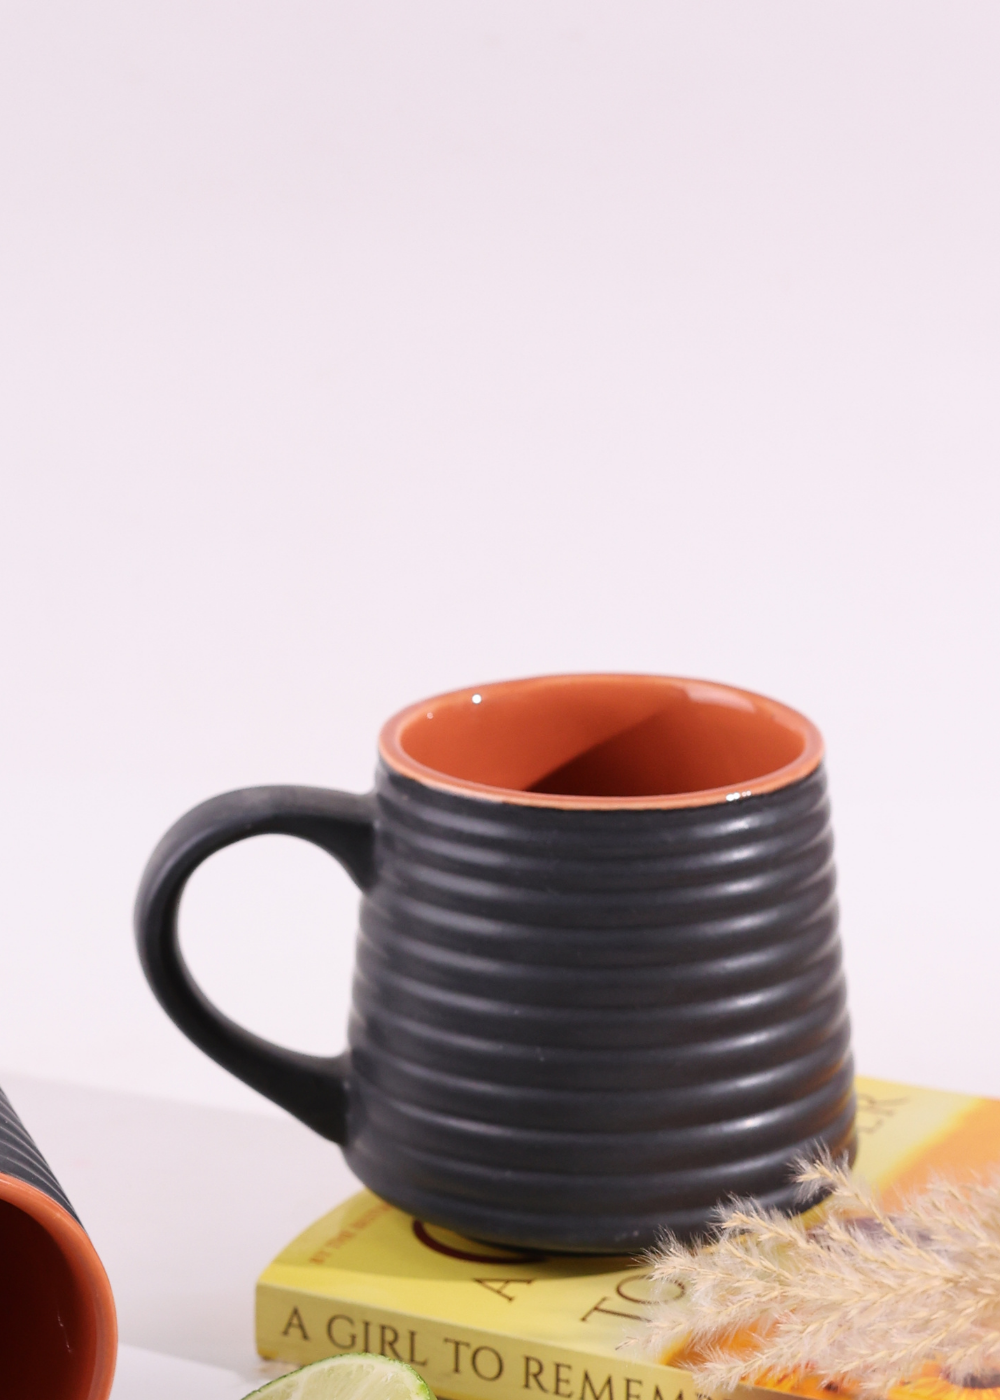 Closeup shot of black ring coffee mug